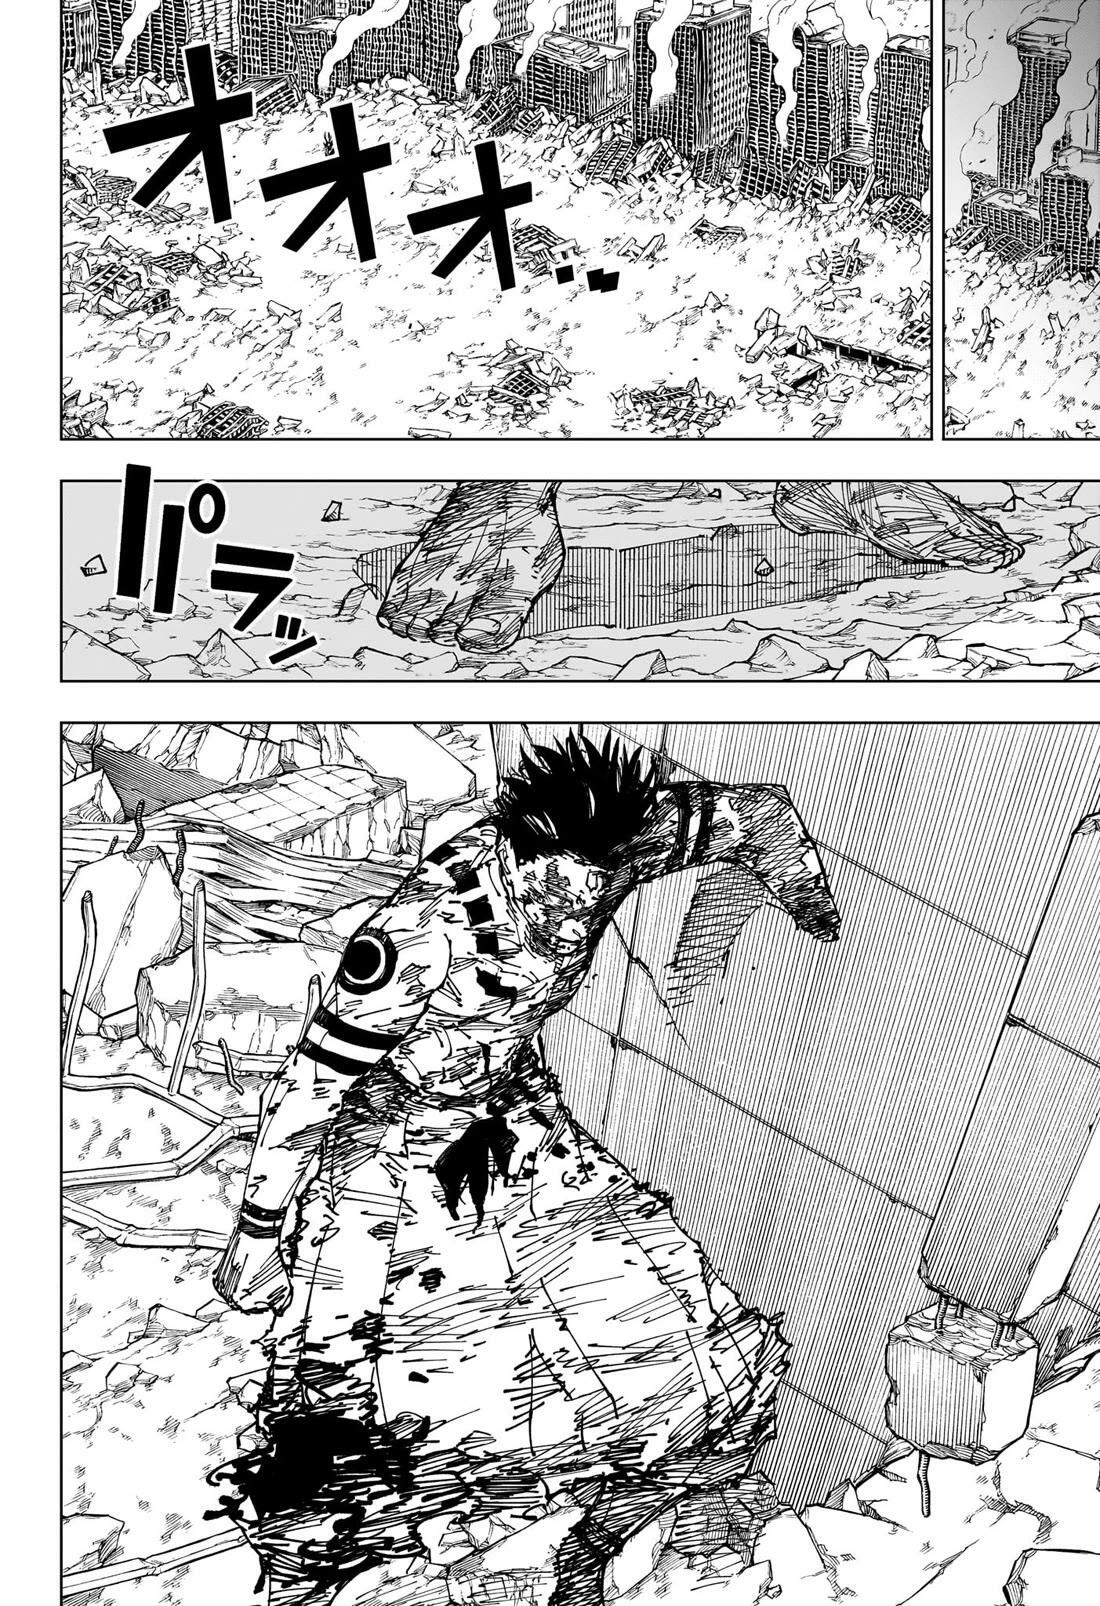 Jujutsu Kaisen Chapter 235: The Decisive Battle In The Uninhabited, Demon-Infested Shinjuku ⑬ page 18 - Mangakakalot